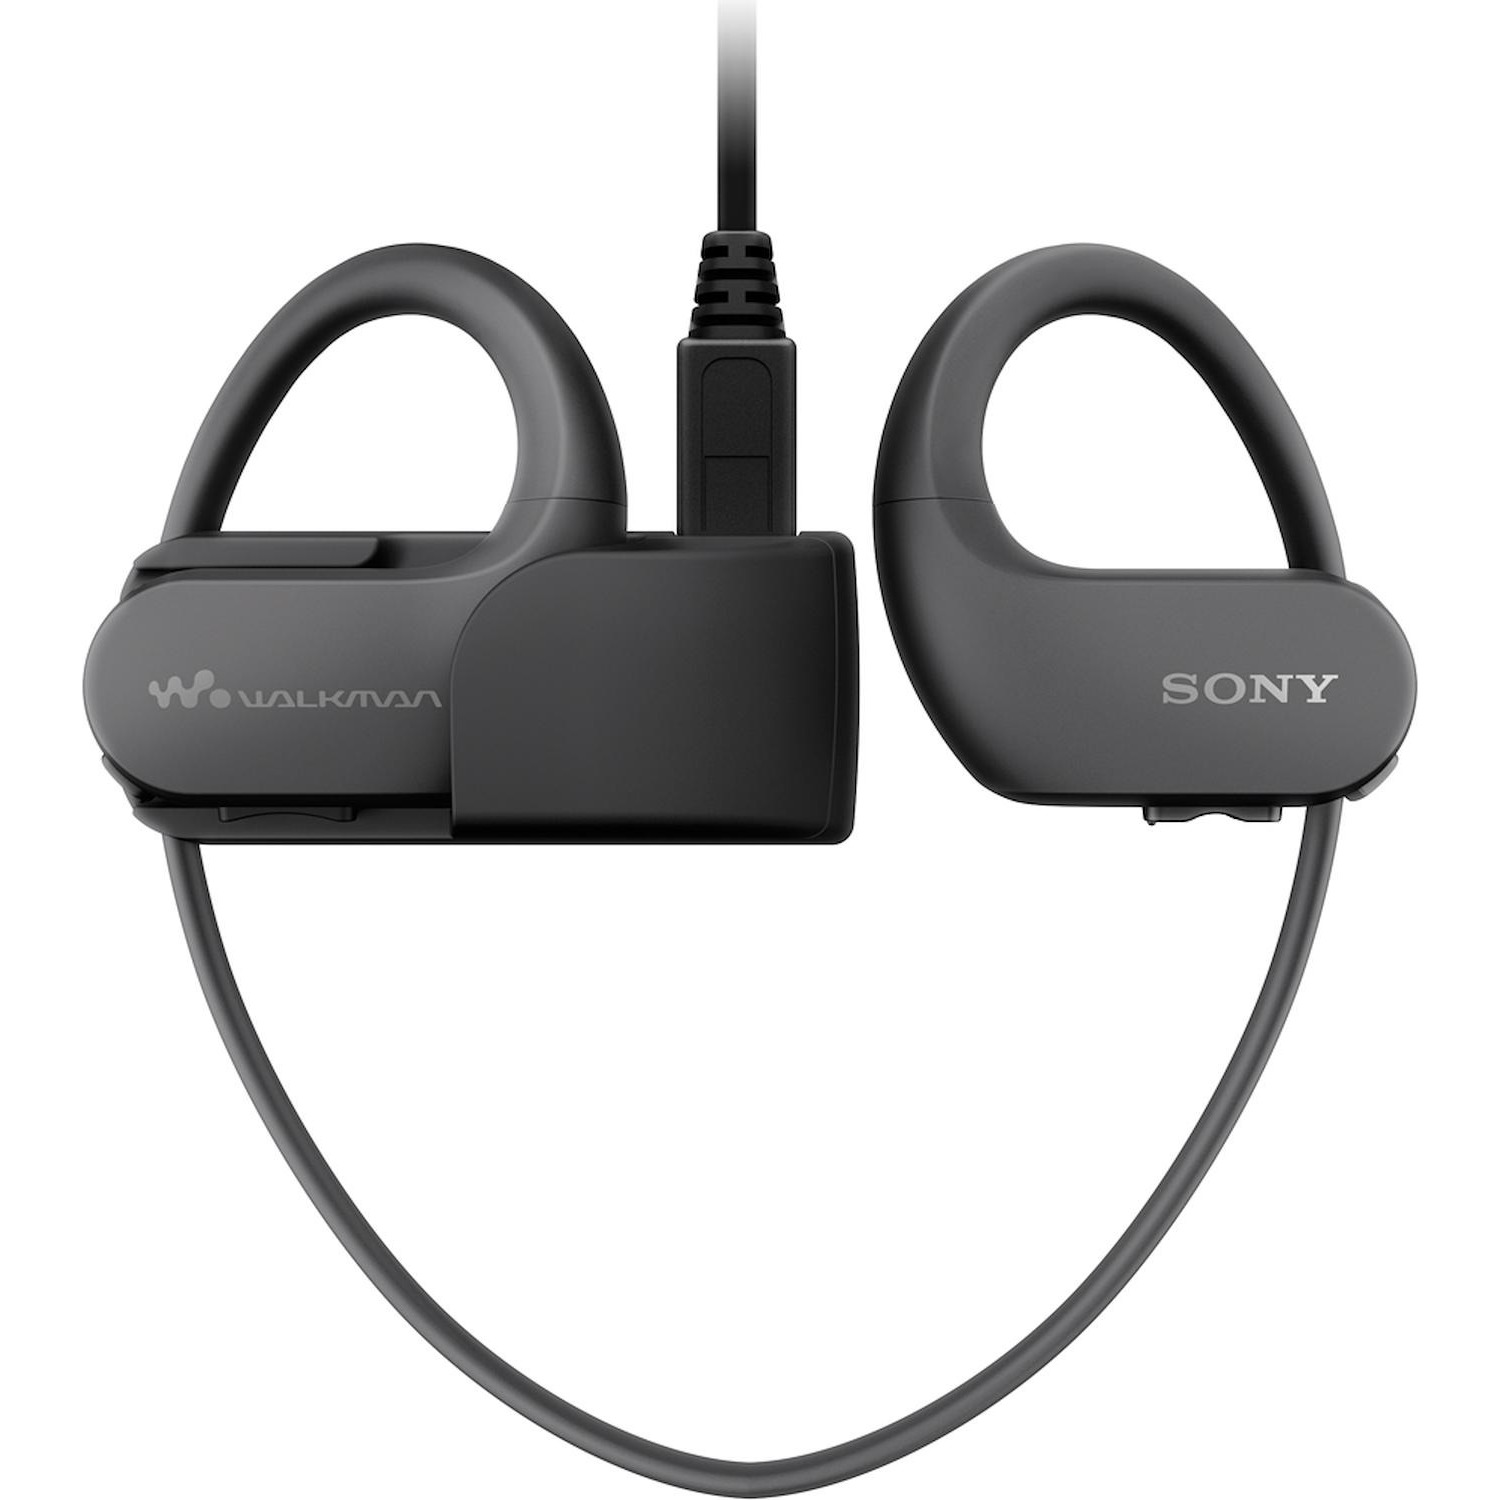 Immagine per MP3 Sony impermeabile indossabile 4GB NWWS413Bk da DIMOStore